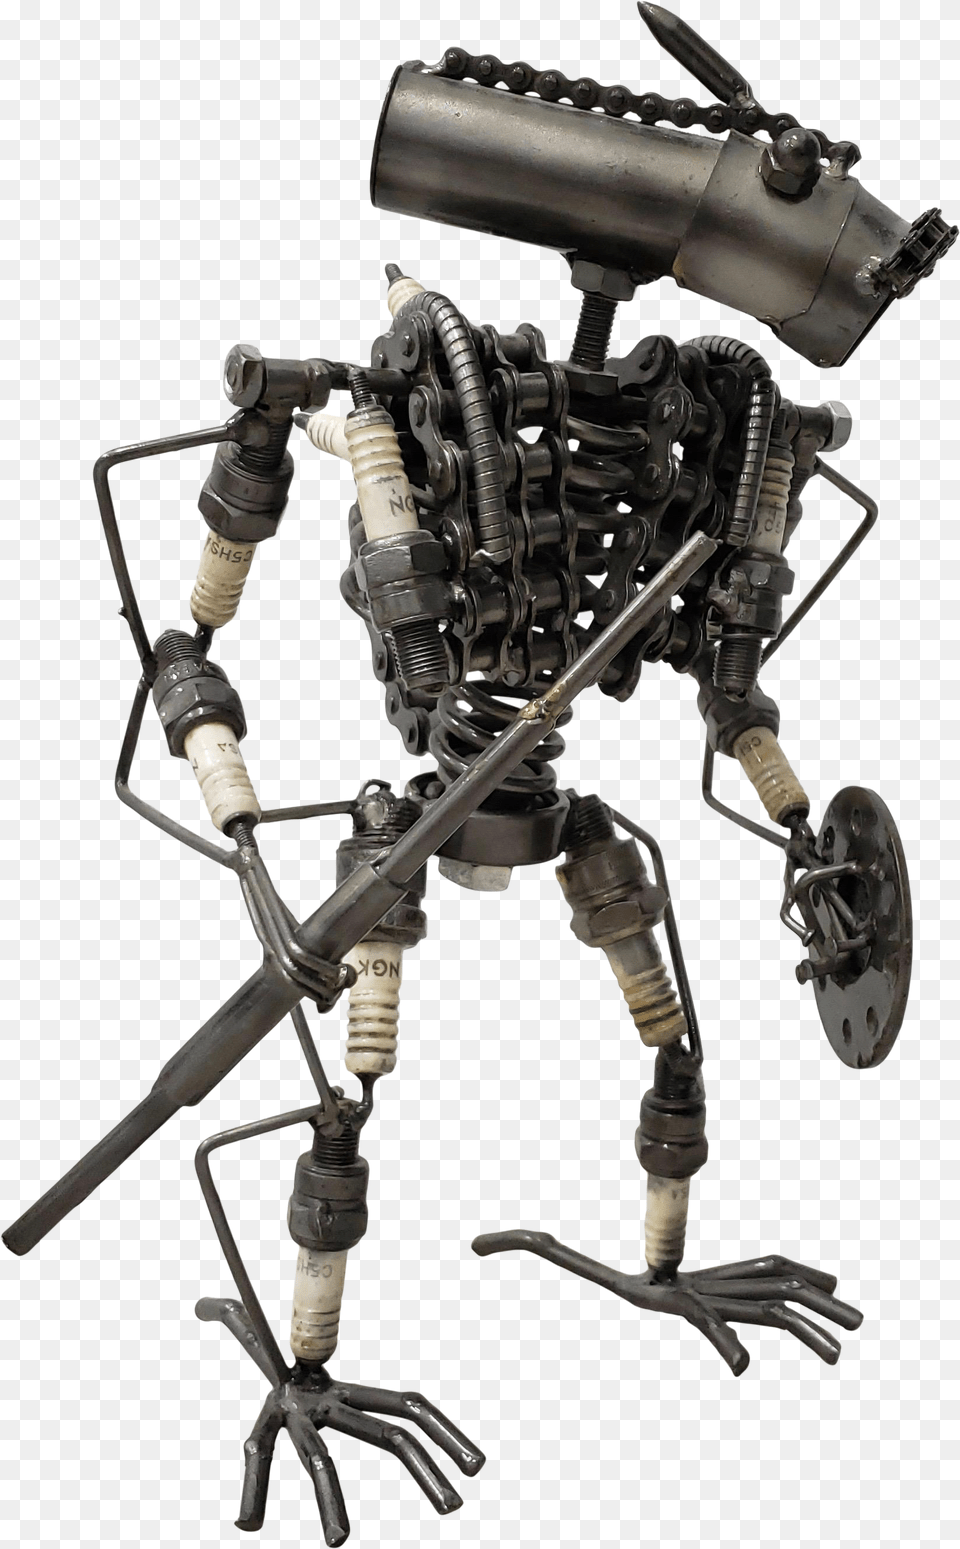 Heavy Gauge Scrap Metal Kinetic Robot Sculpture Ranged Weapon, E-scooter, Transportation, Vehicle Png